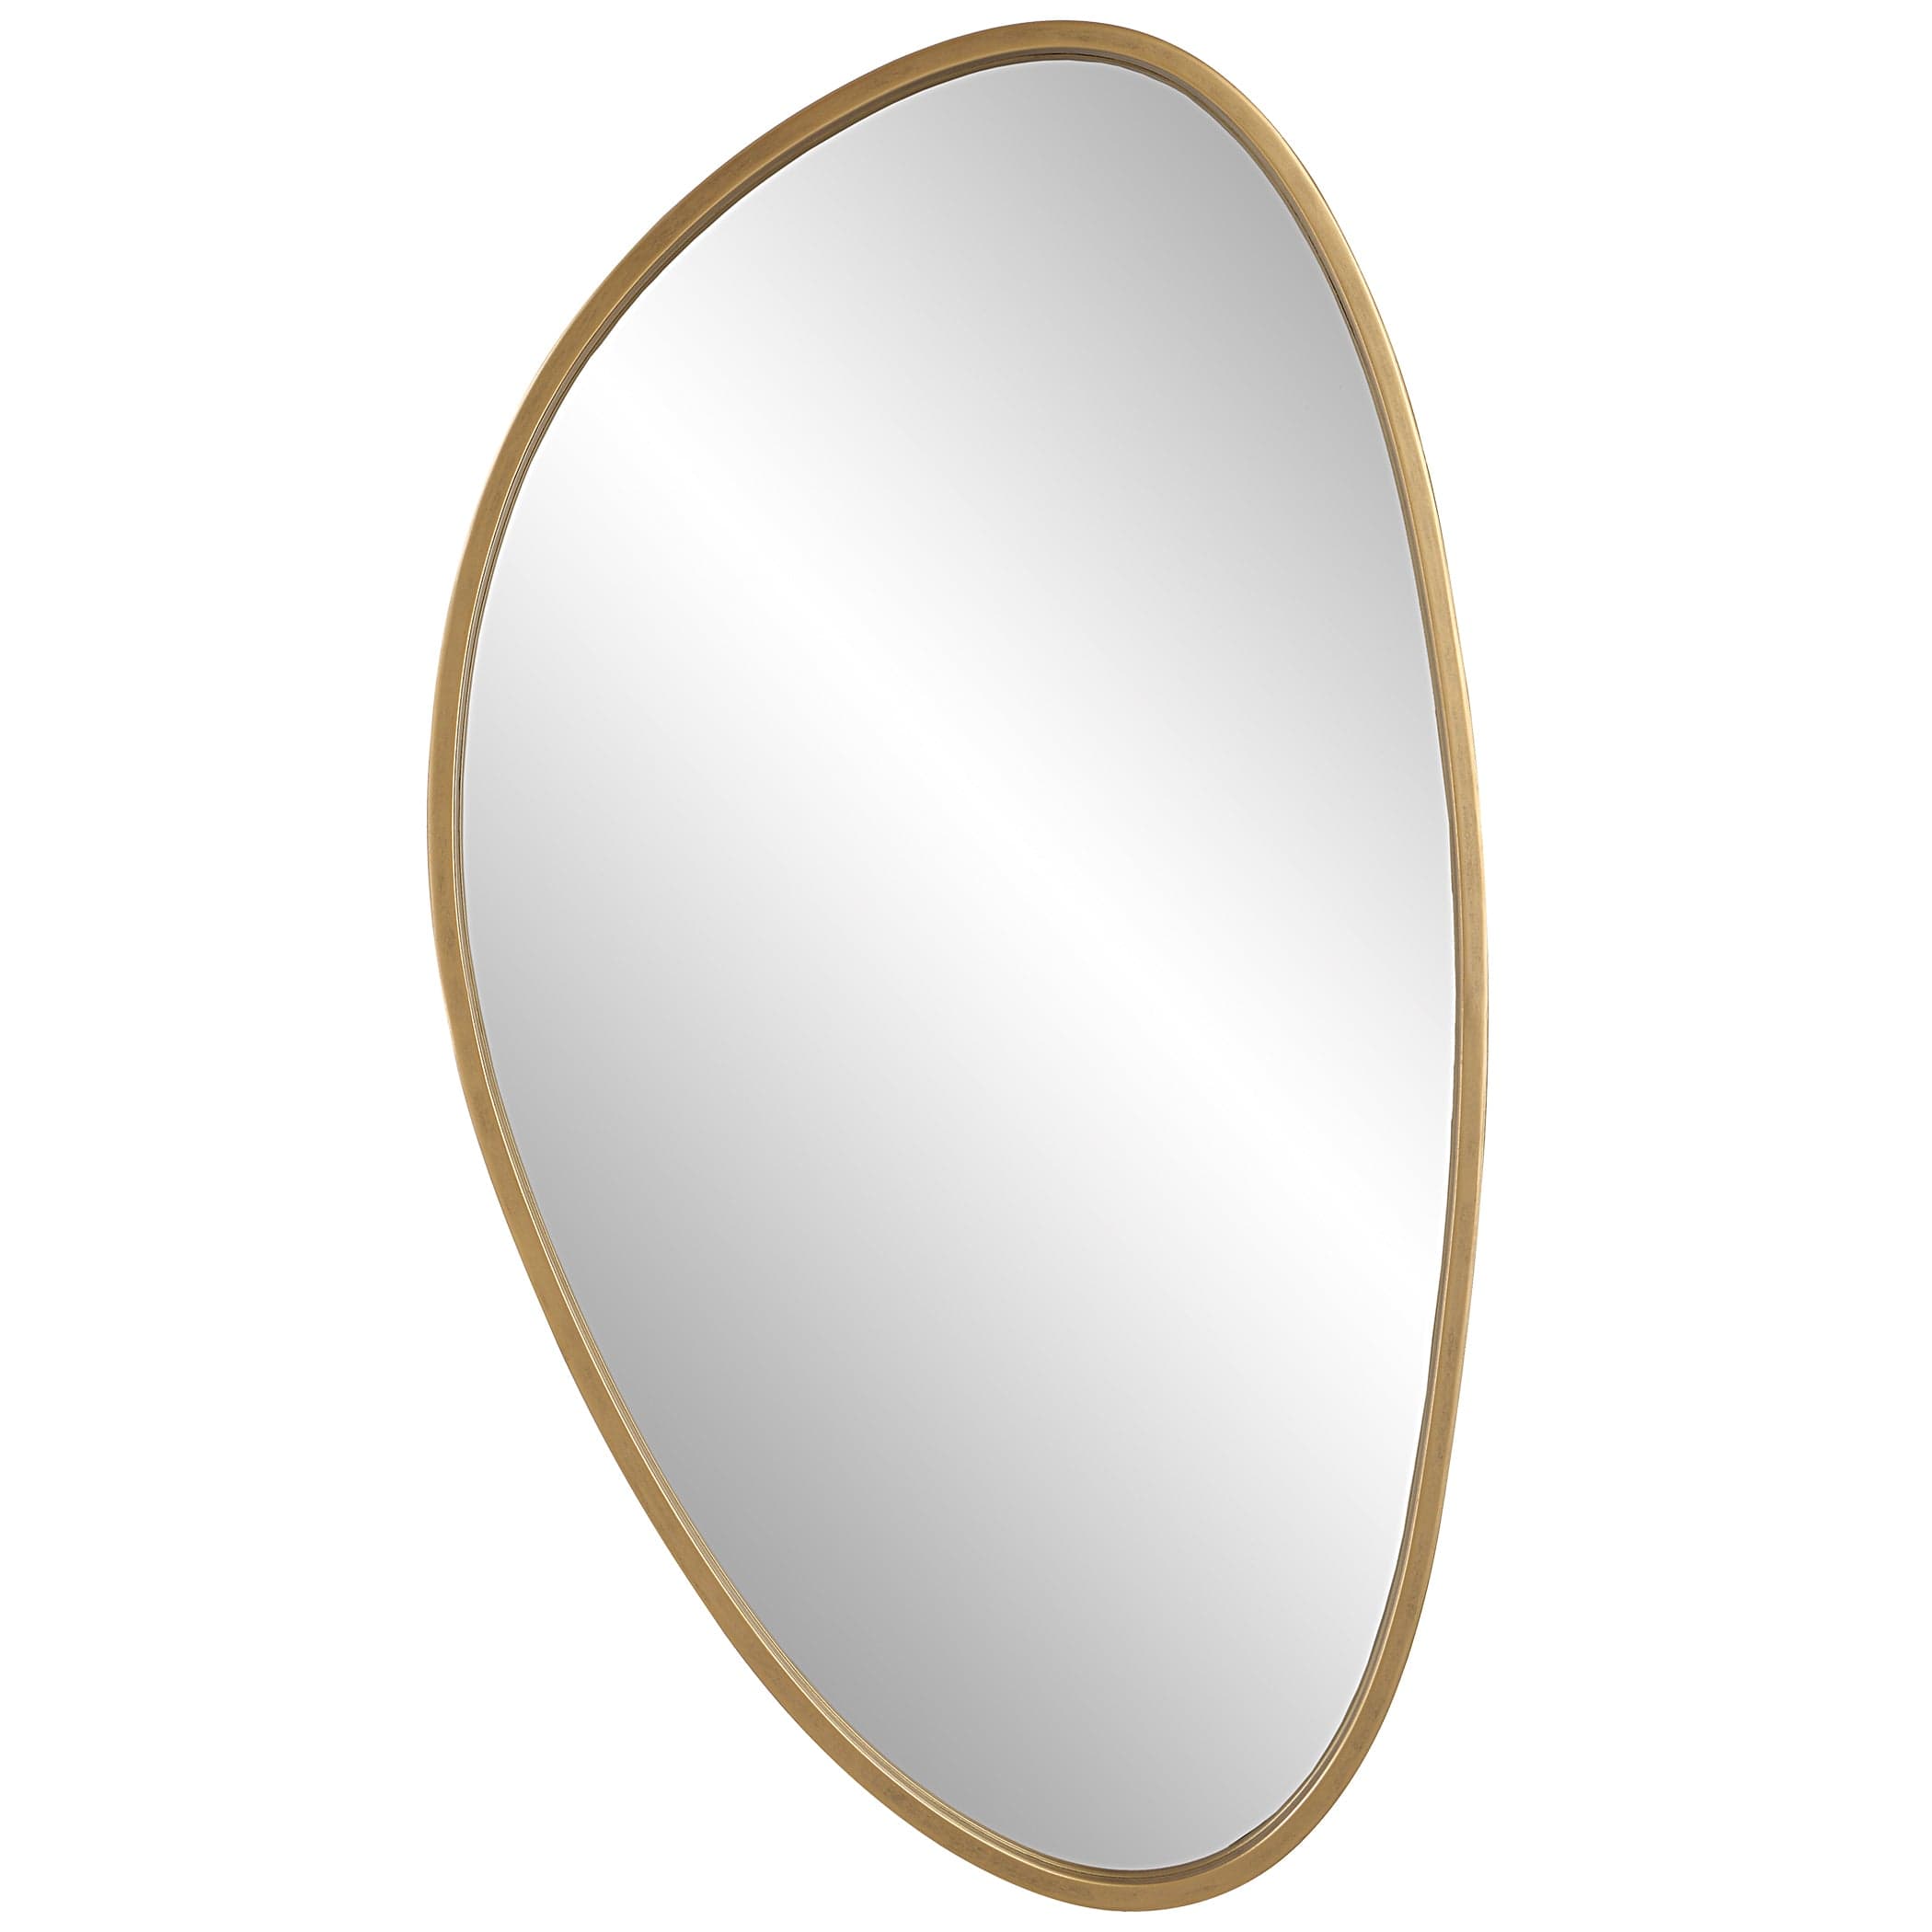 Boomerang Gold Mirror Uttermost